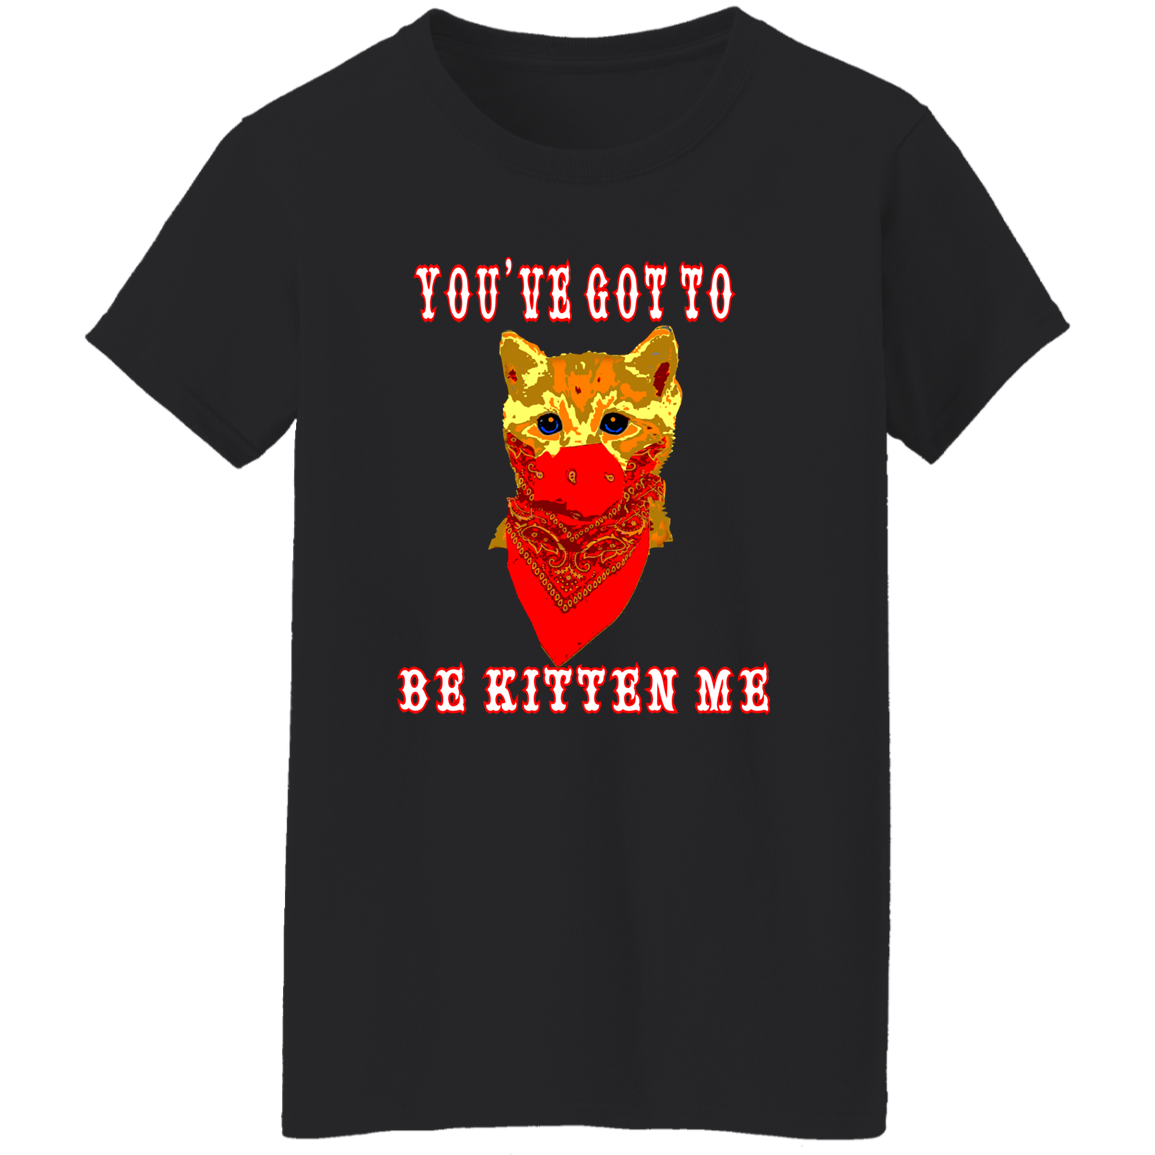 ArtichokeUSA Custom Design. You've Got To Be Kitten Me?! 2020, Not What We Expected. Ladies' 5.3 oz. T-Shirt